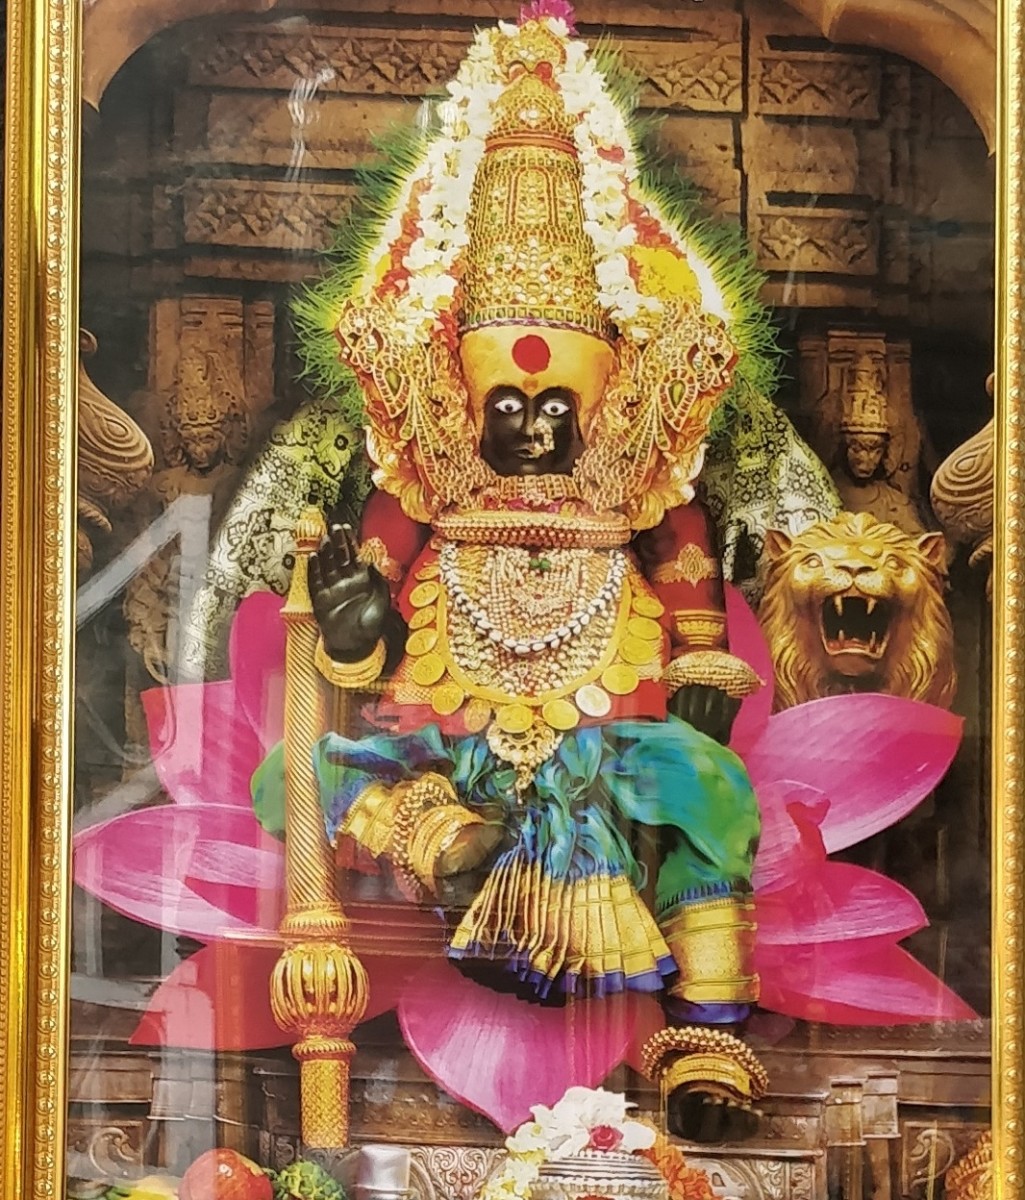 Mahalakshmi of Kolhapur, Maharashtra, India